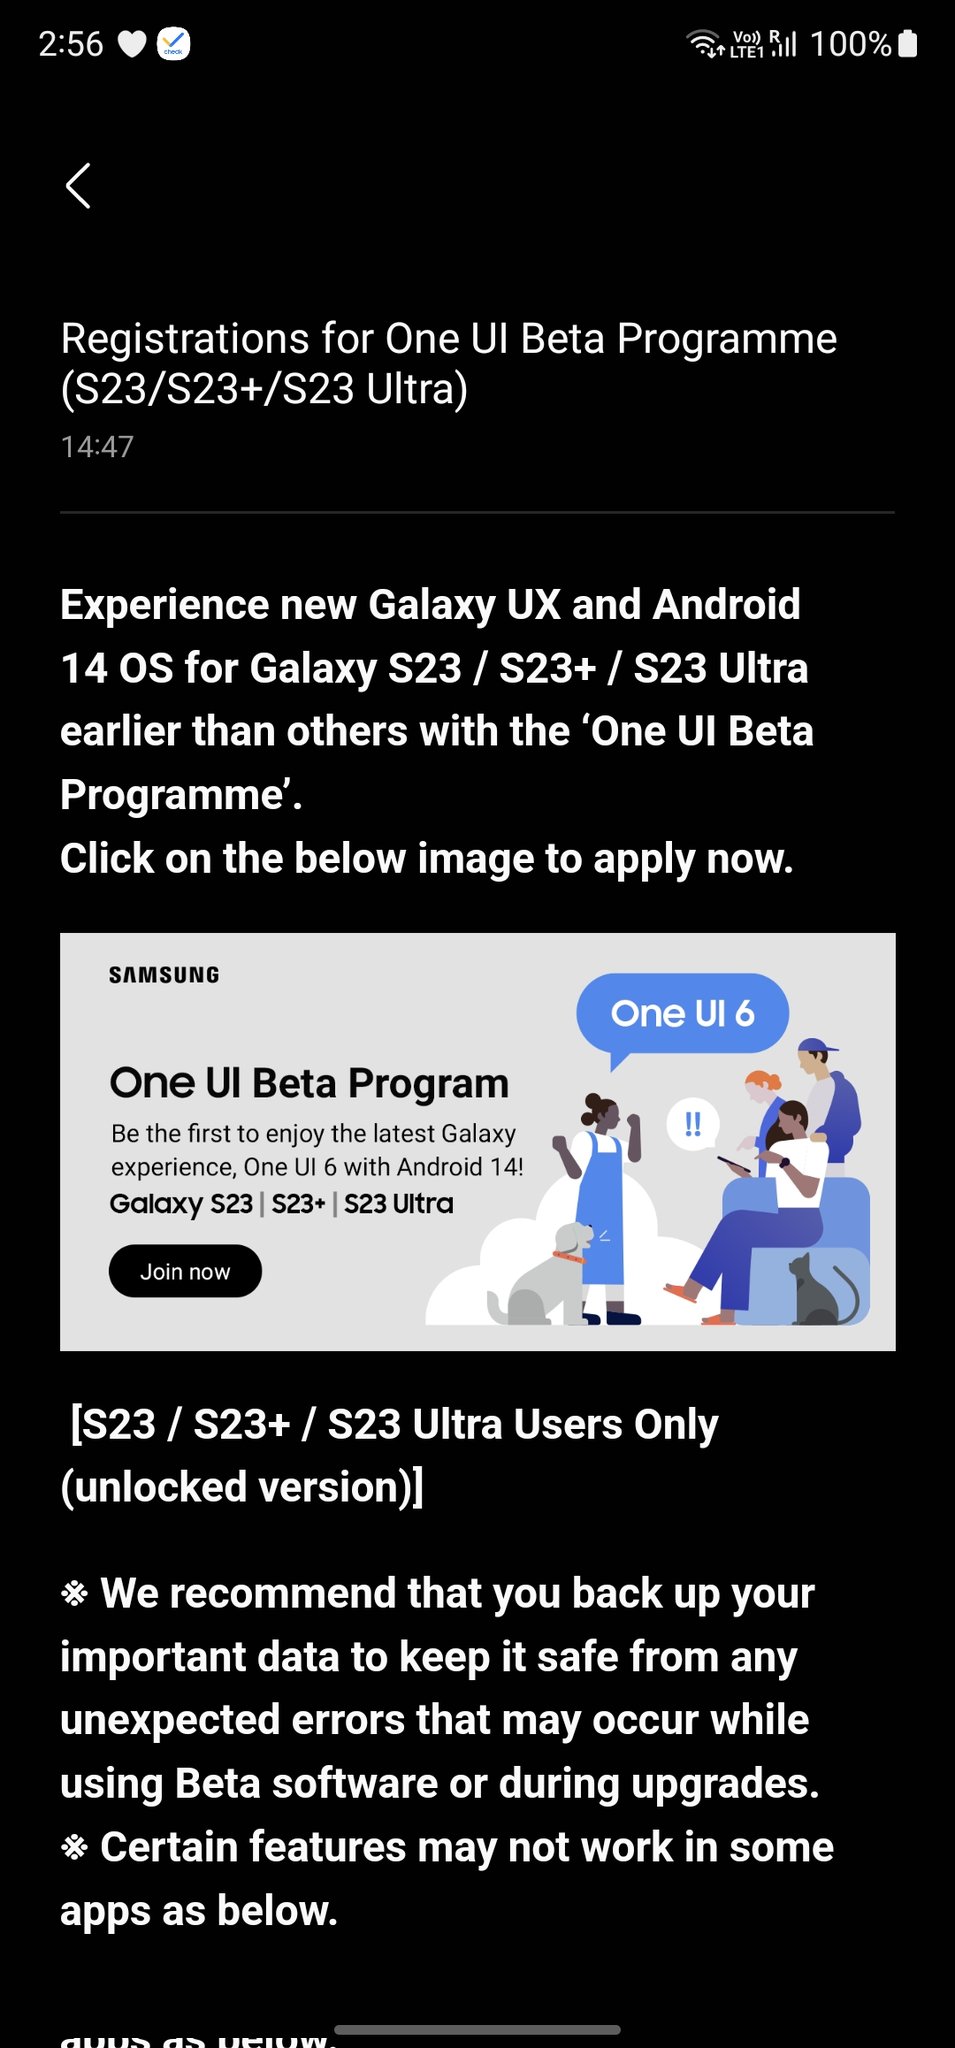 Samsung OneUI 6 beta programme